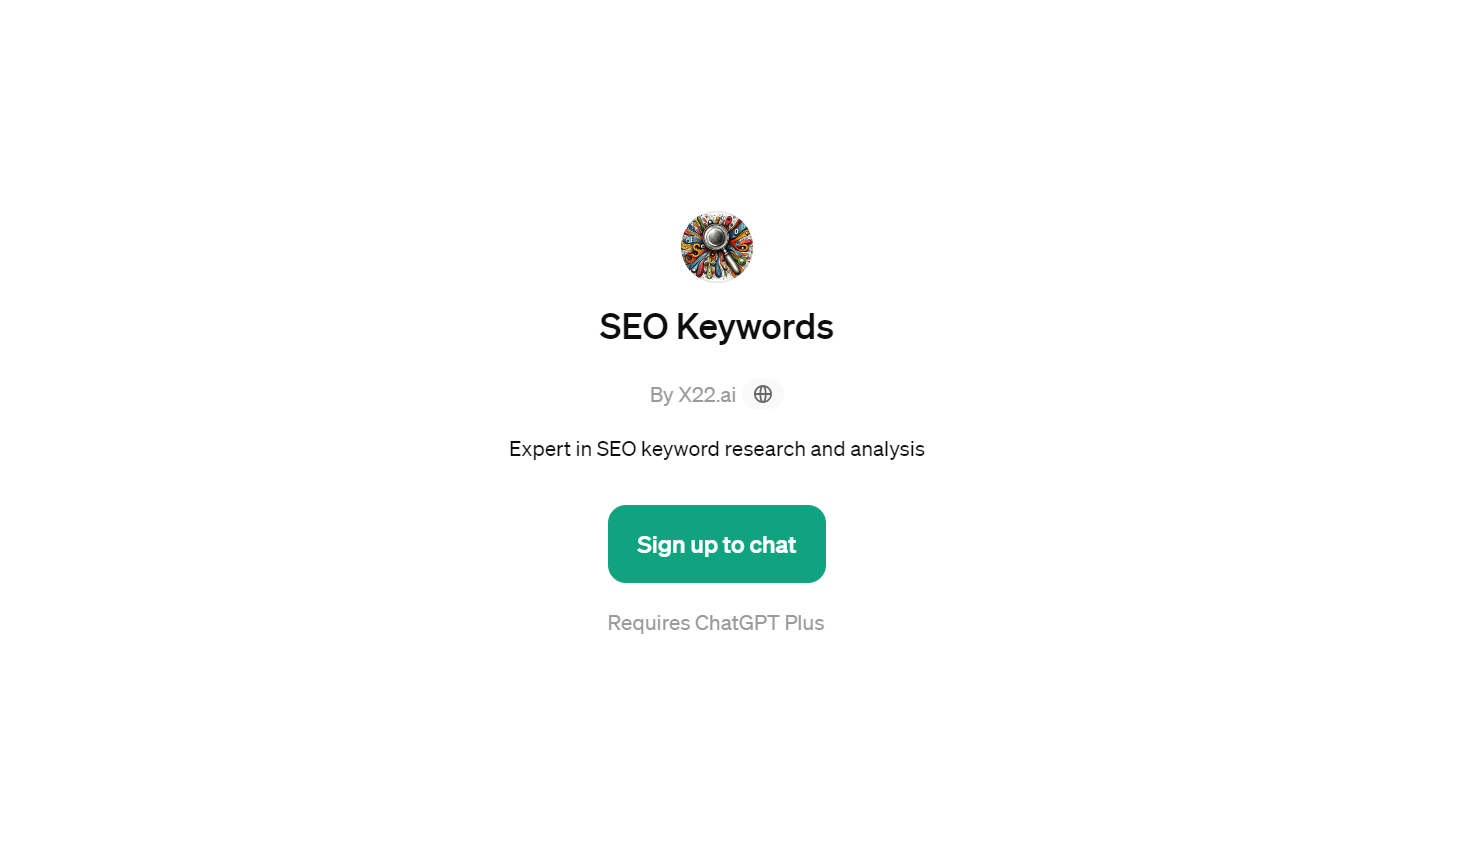 SEO Keywords - Get Relevant Keywords